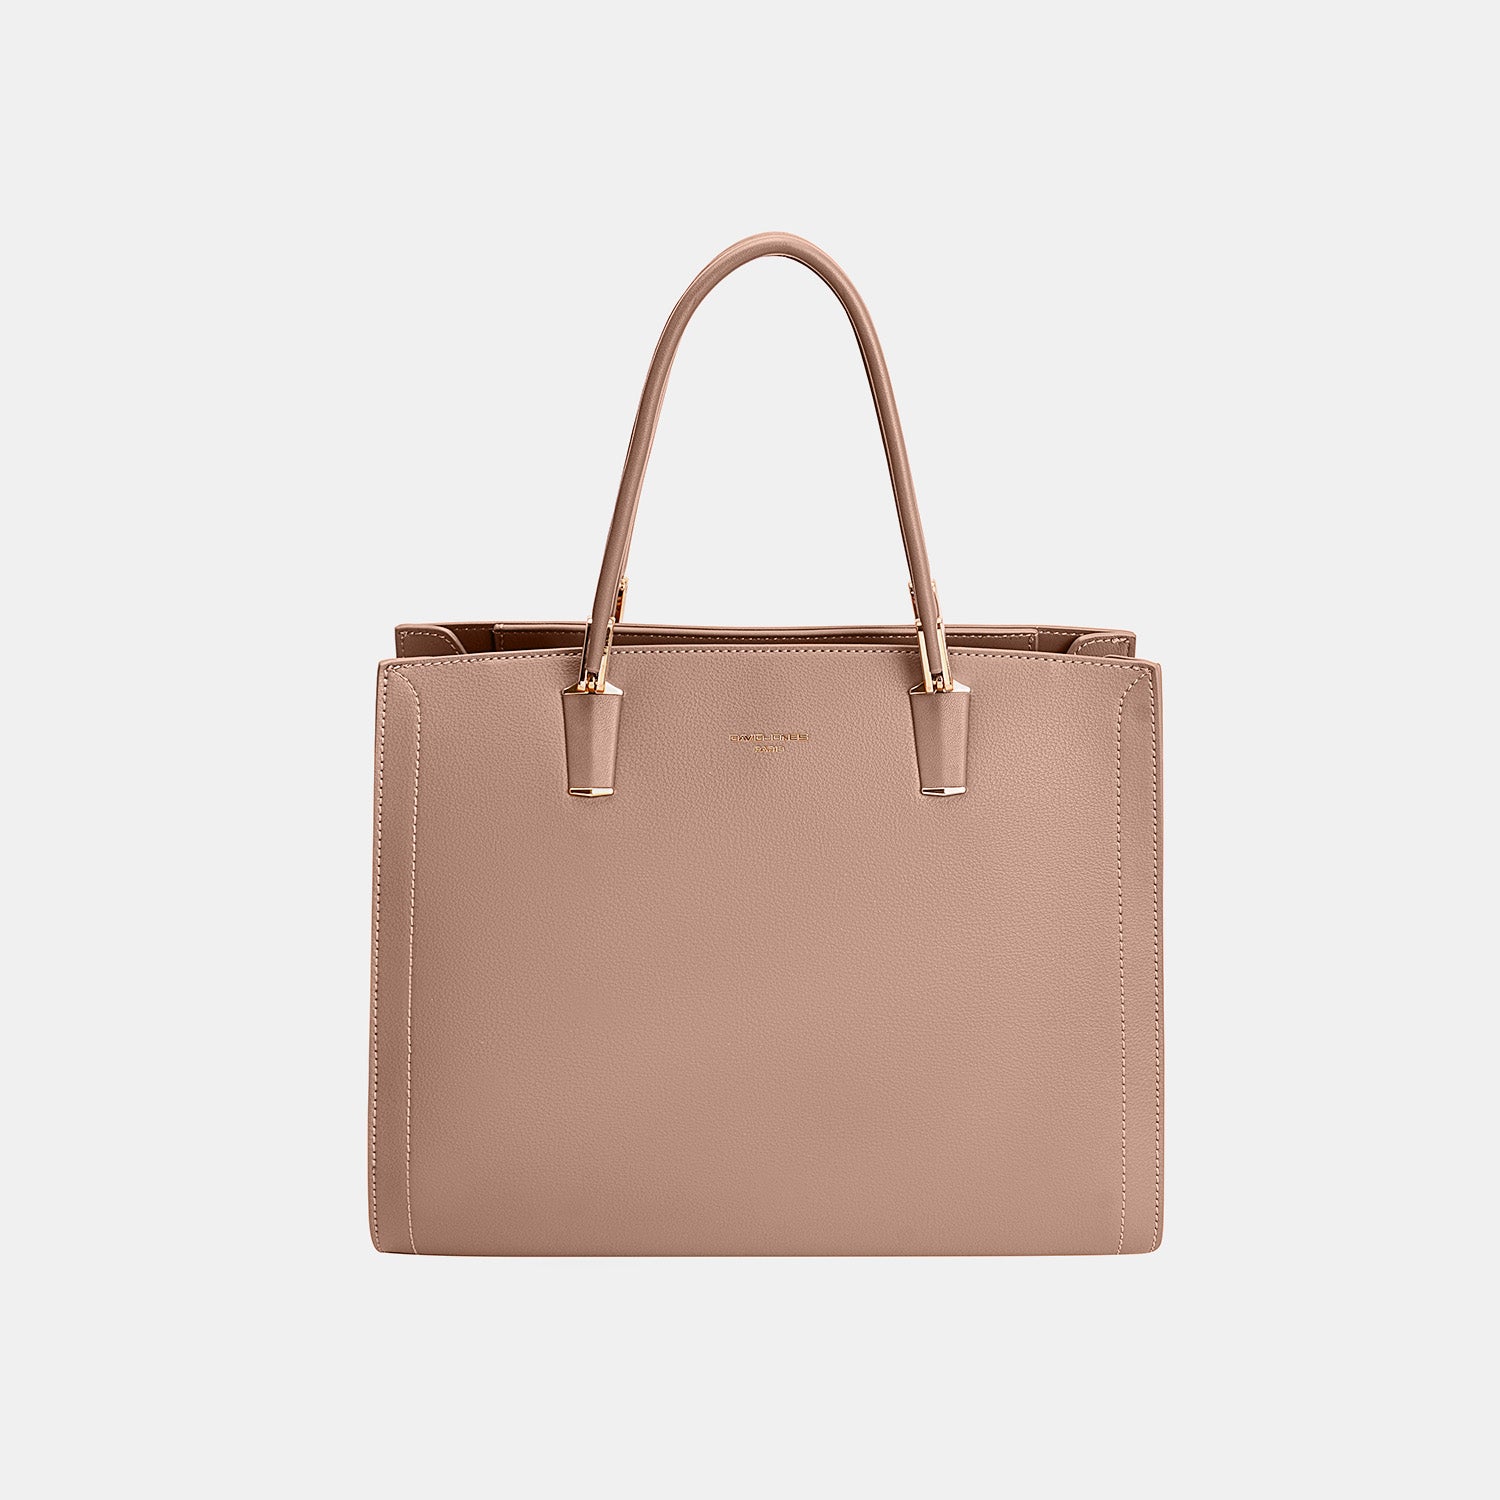 David Jones PU Leather Medium Handbag Pink One Size 